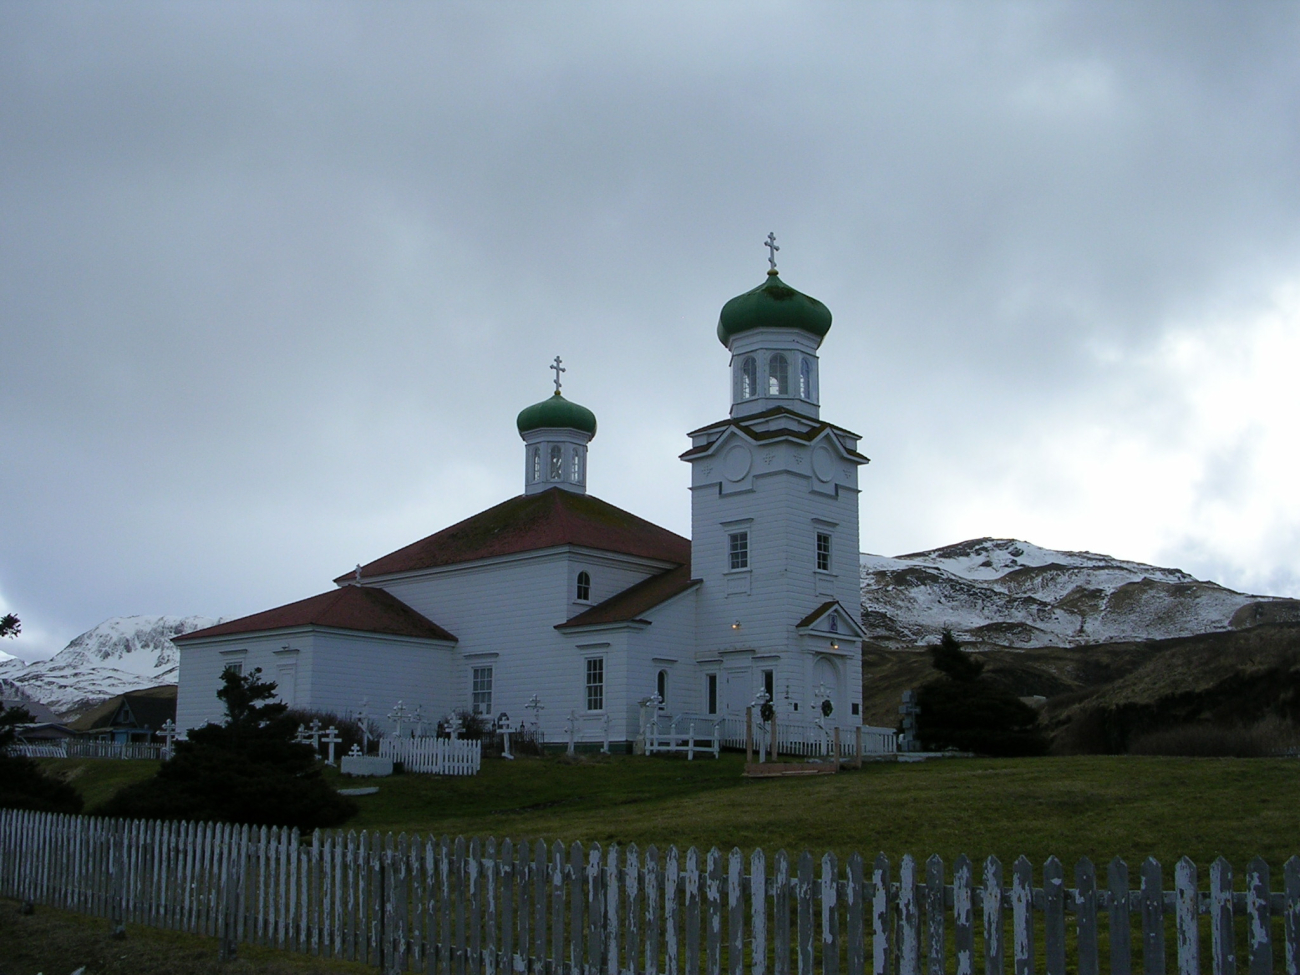 The Russian Orthodox Church at Dutch Harbor